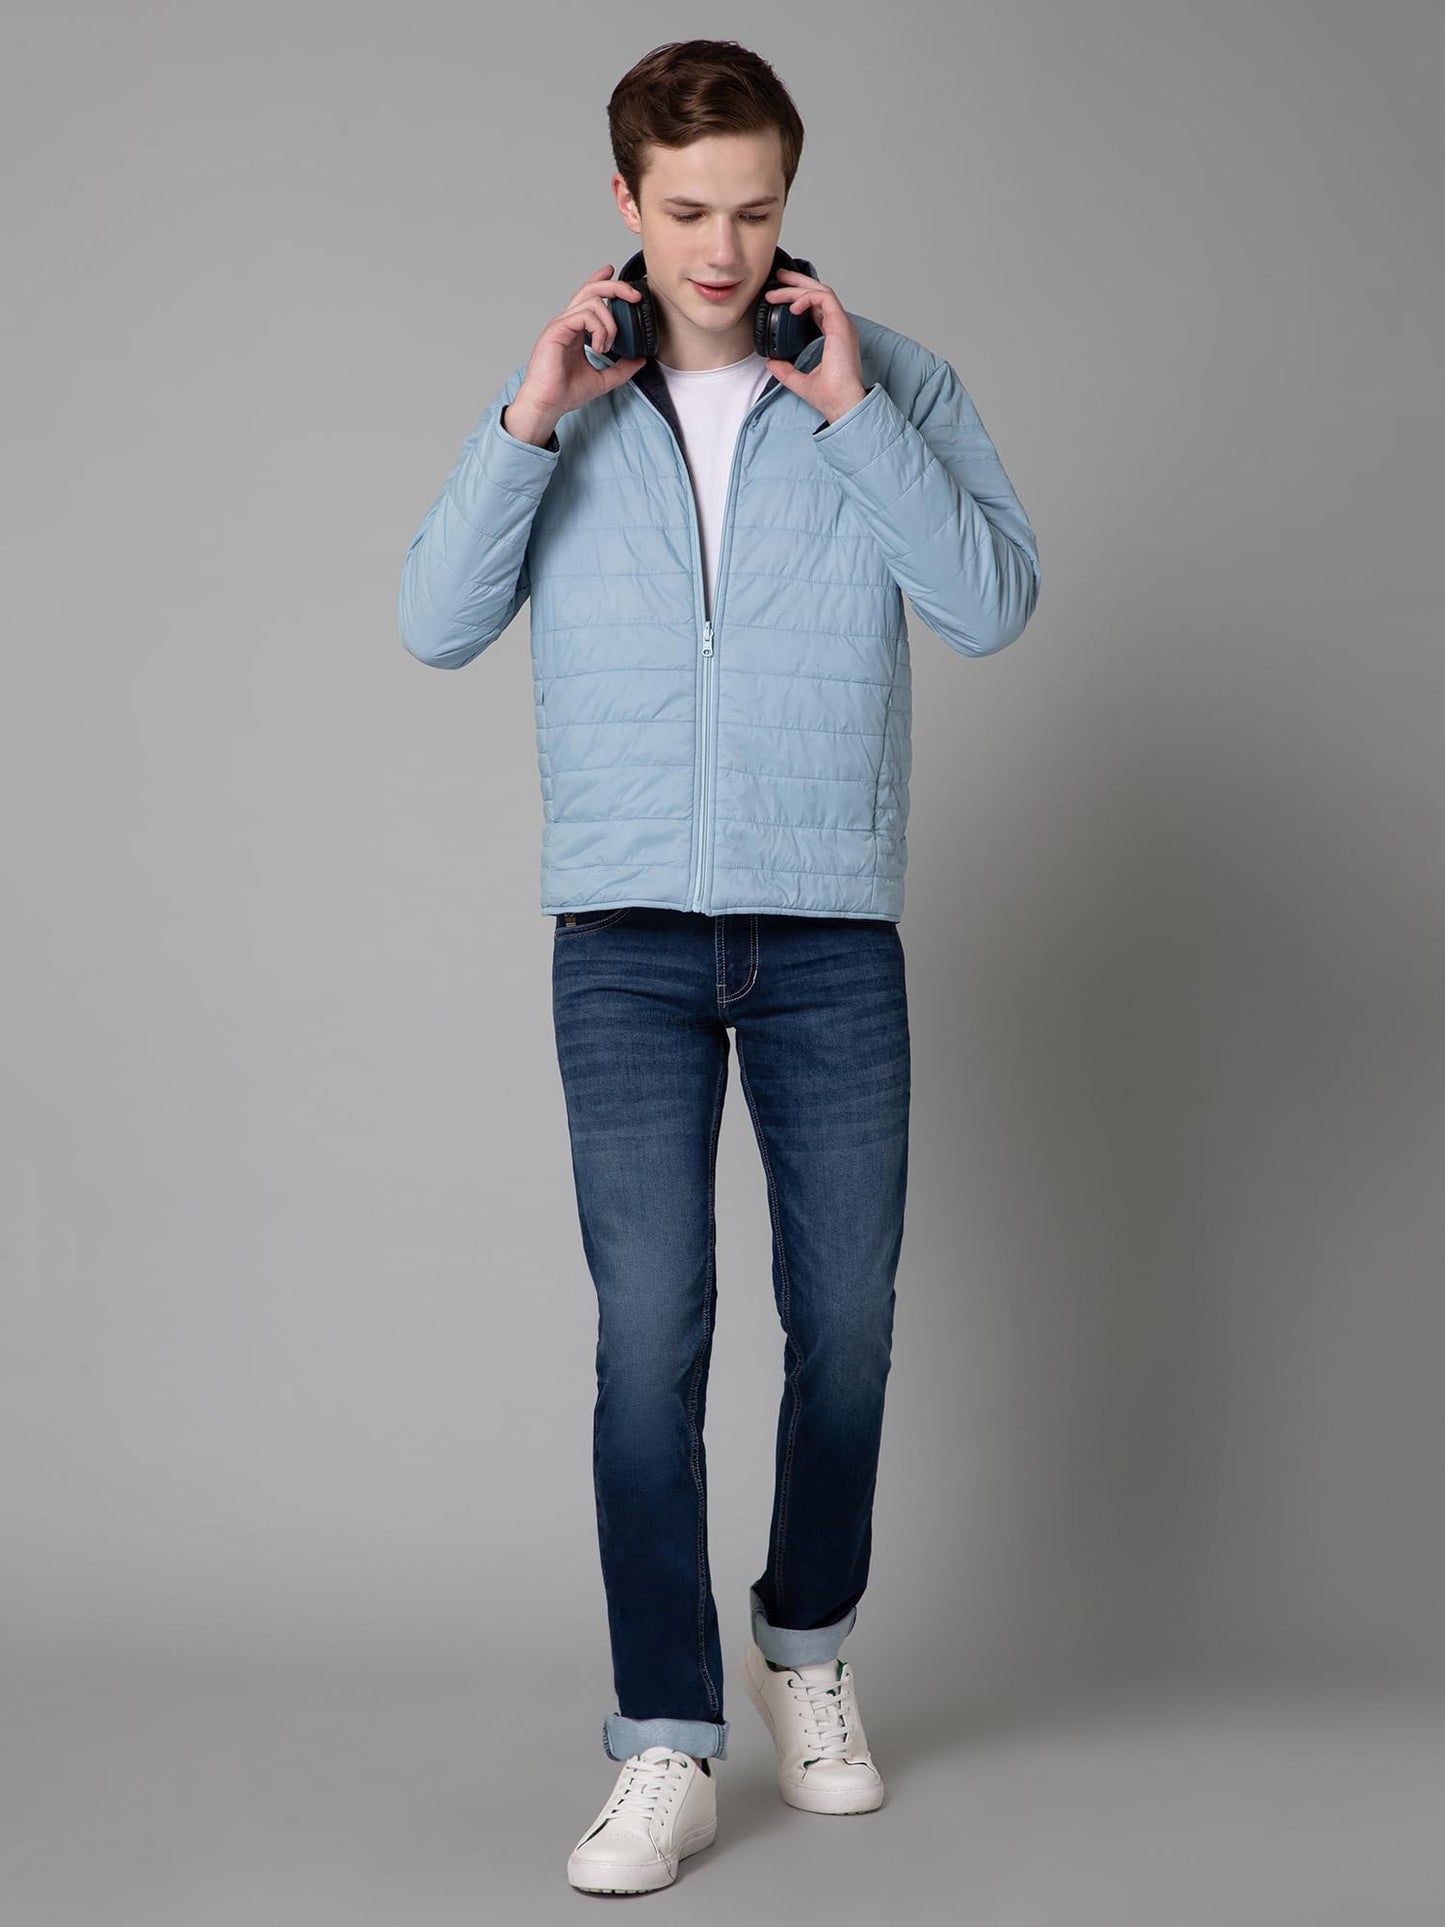 Cantabil Solid Reversible Full Sleeves Mock collar Regular Fit Mens Casual Jacket | Casual Winter Jackets for Men | Mens Jackets for Winter Wear (MJKT00148_SKY_M)